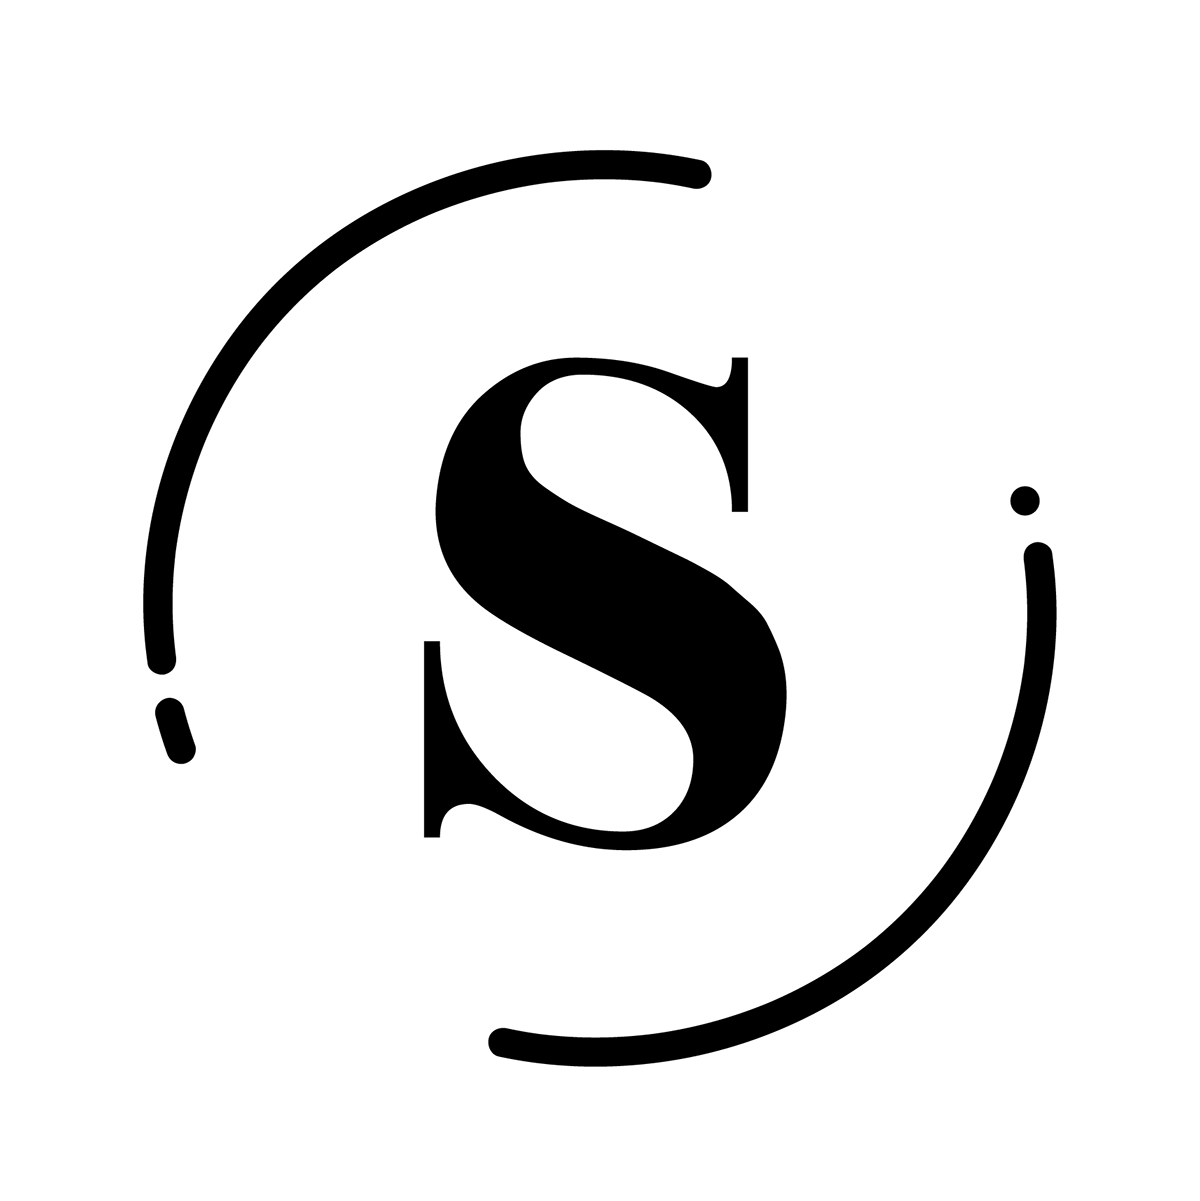 Scripps Logo, 2020 on Behance